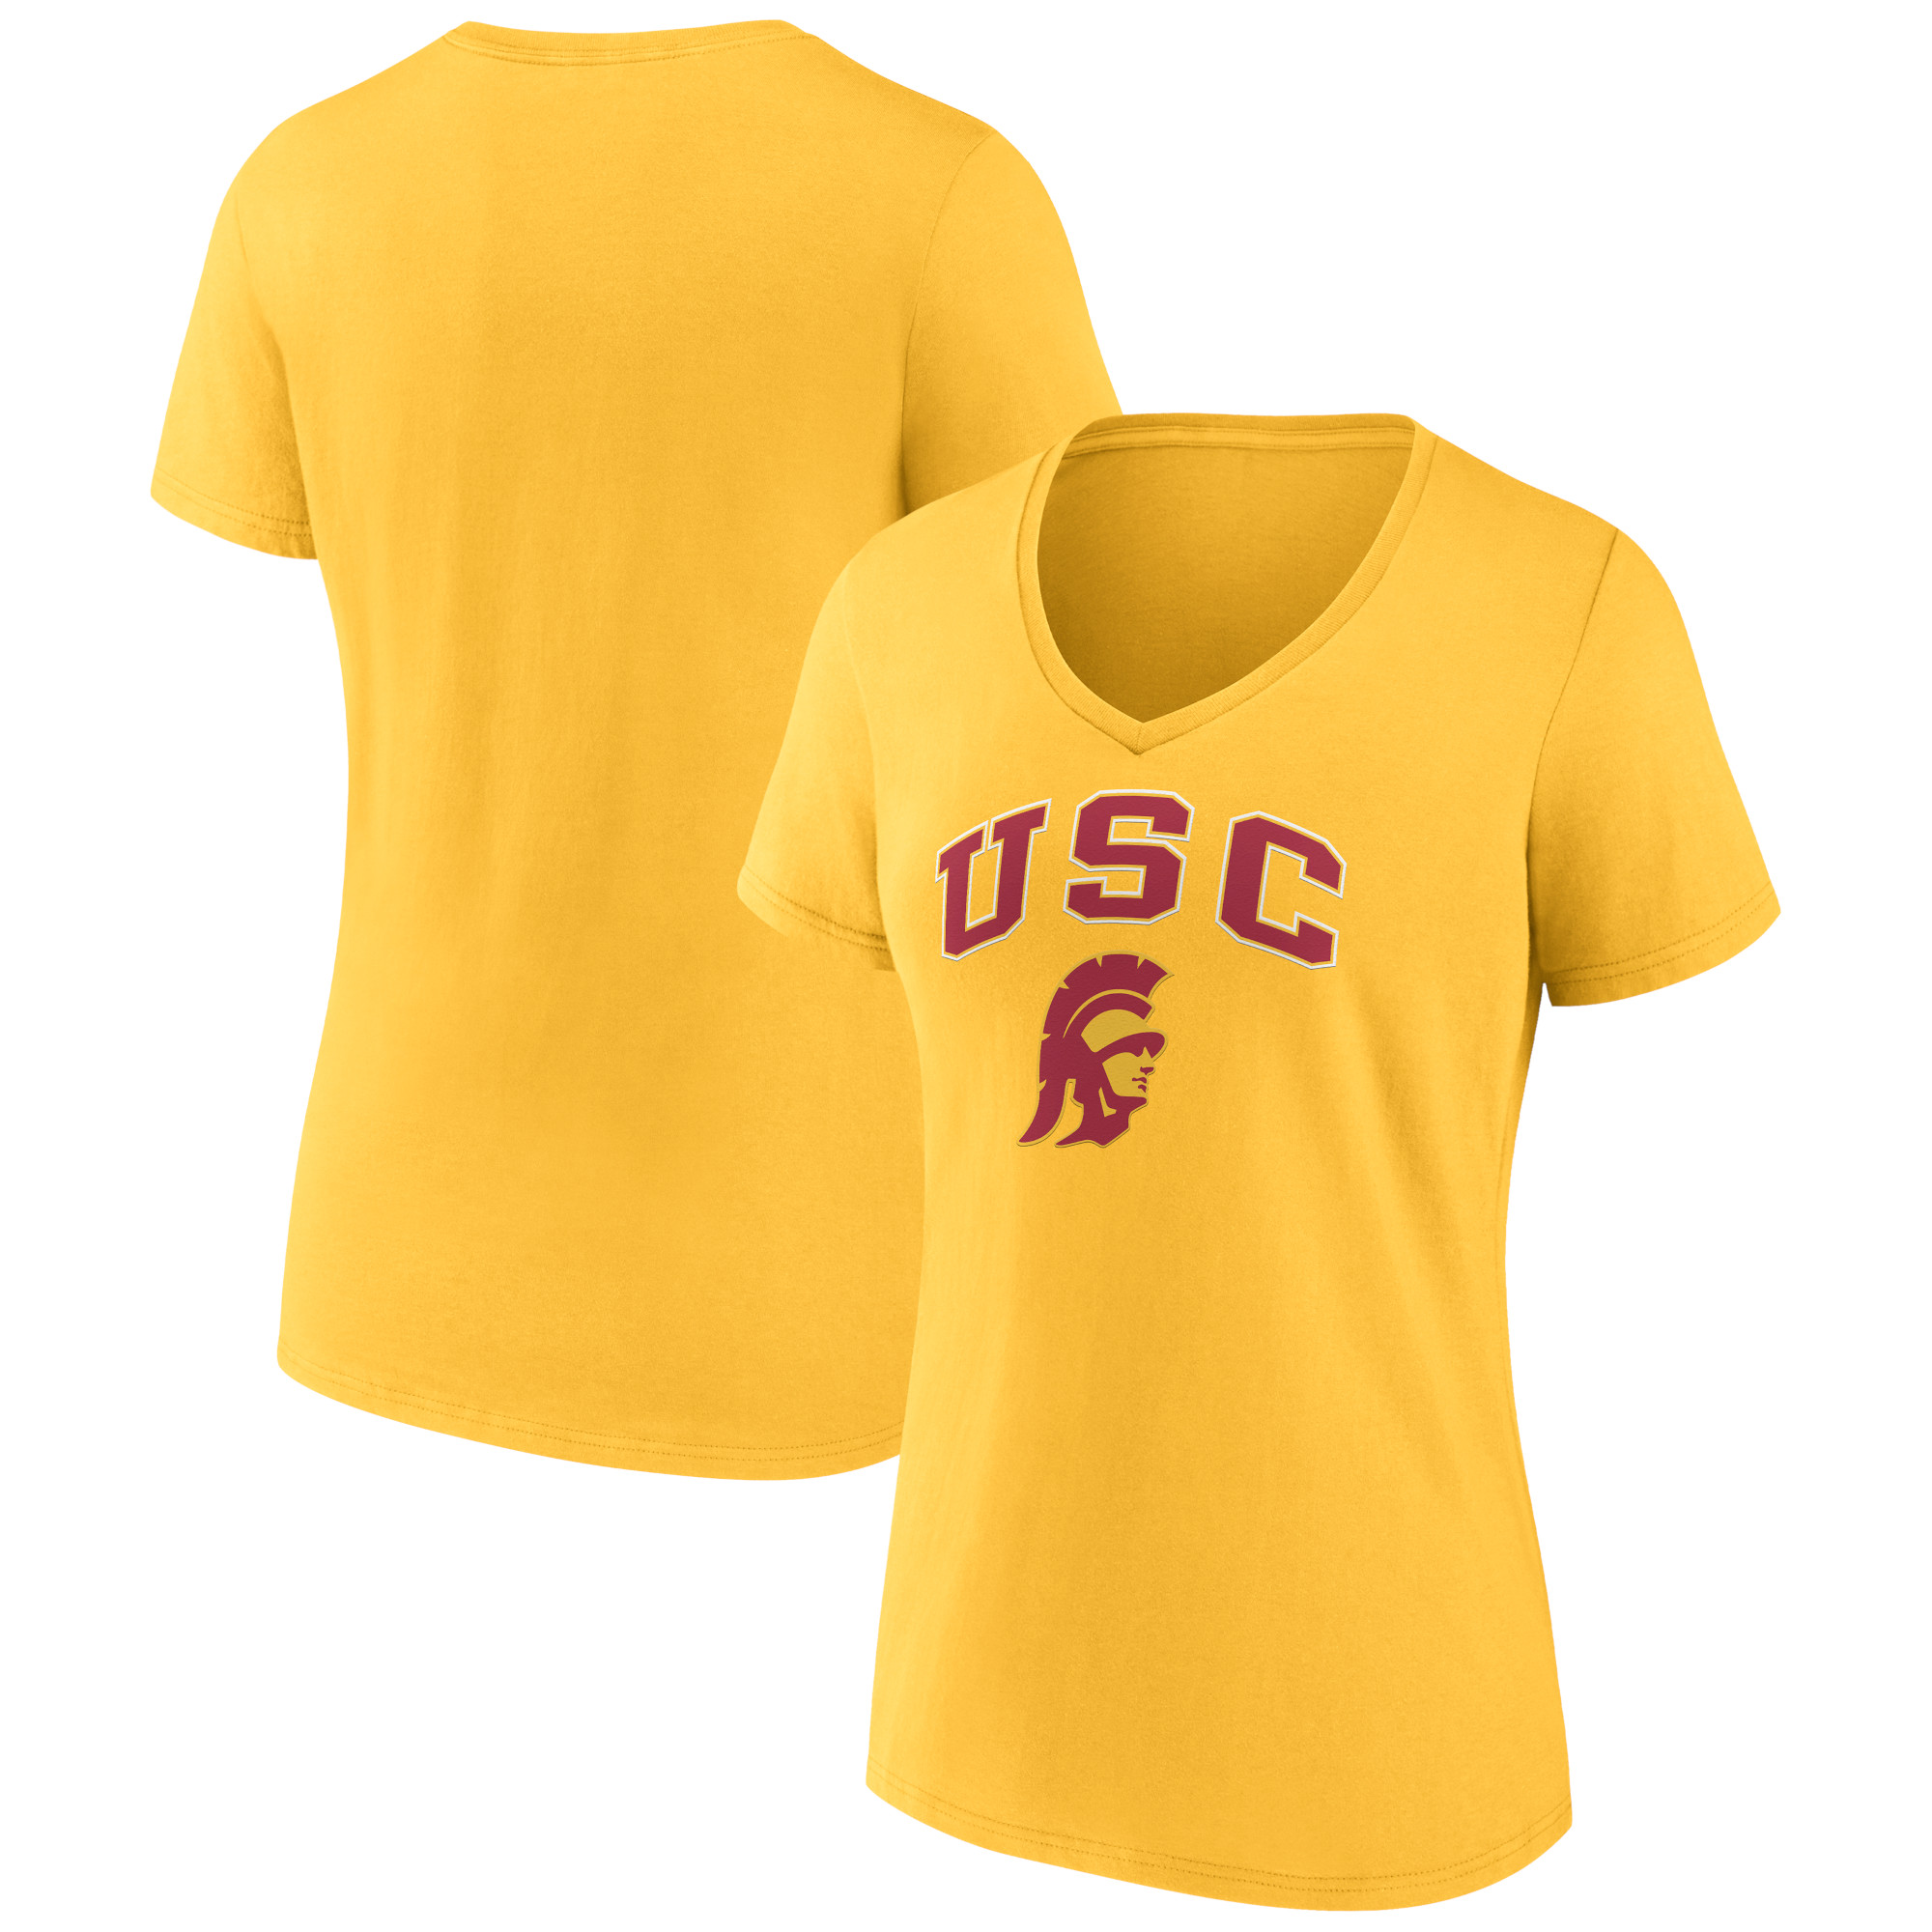 Women's Fanatics Branded Gold USC Trojans Evergreen Campus V-Neck T-Shirt - image 1 of 3